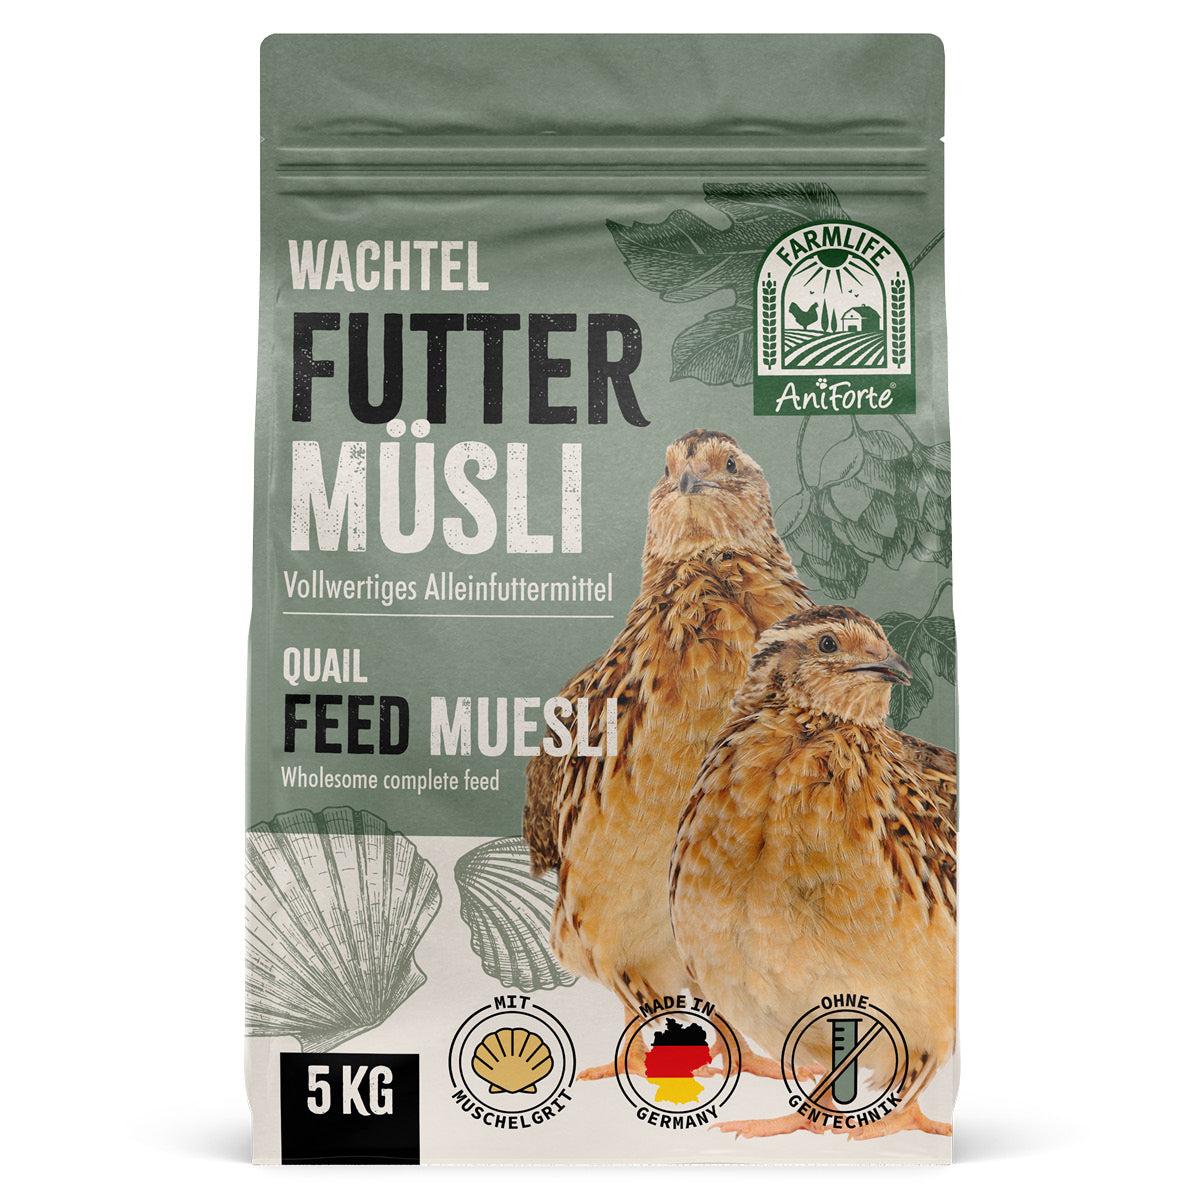 Aniforte FarmLife Wachtel Futter Müsli 5 kg